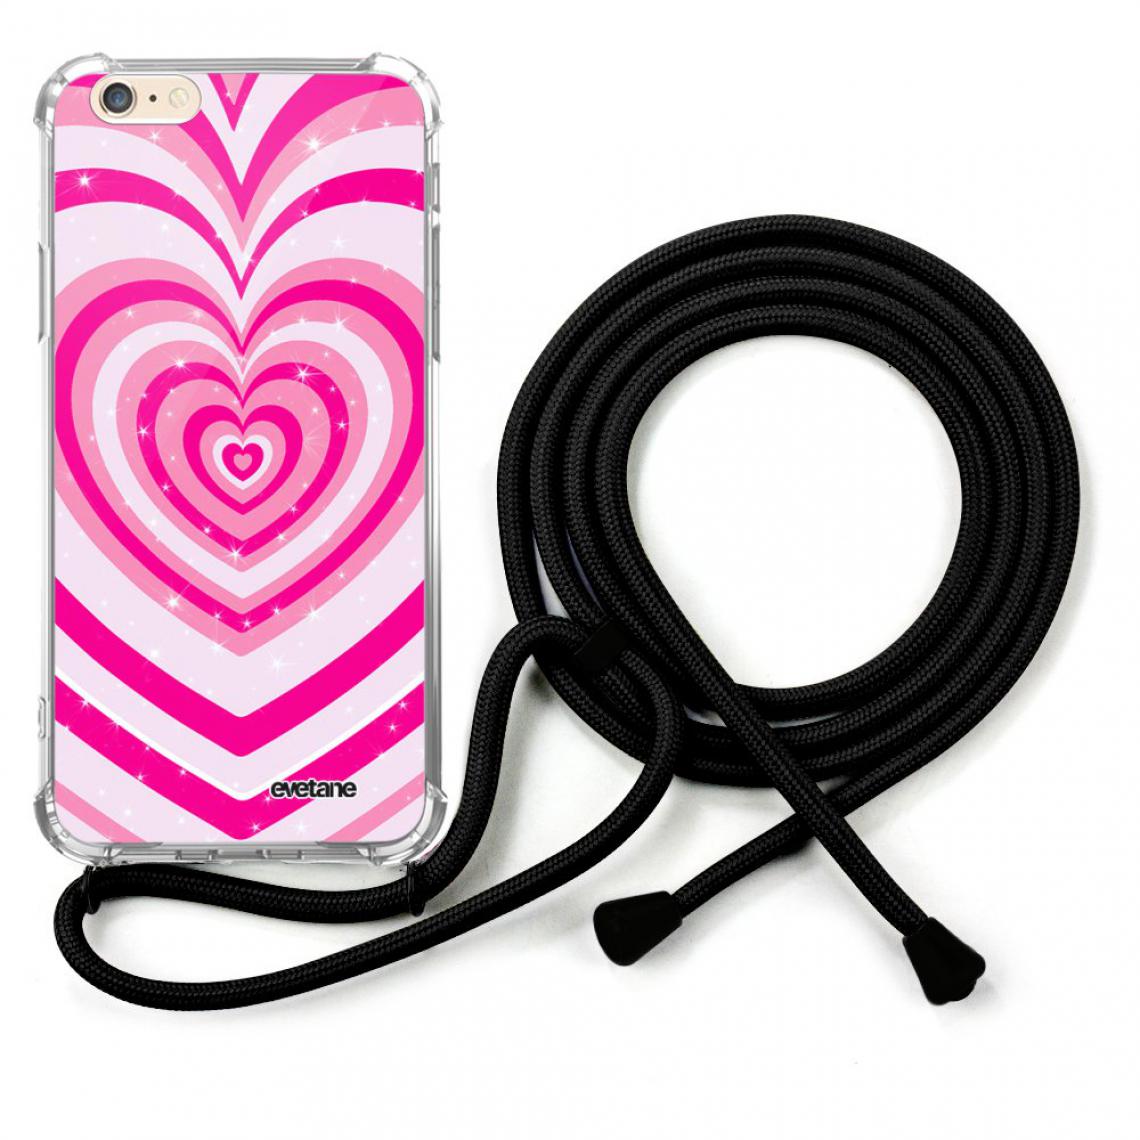 Evetane - Coque iPhone 6/6S coque avec cordon transparente Coeur Psychédélique Rose - Coque, étui smartphone